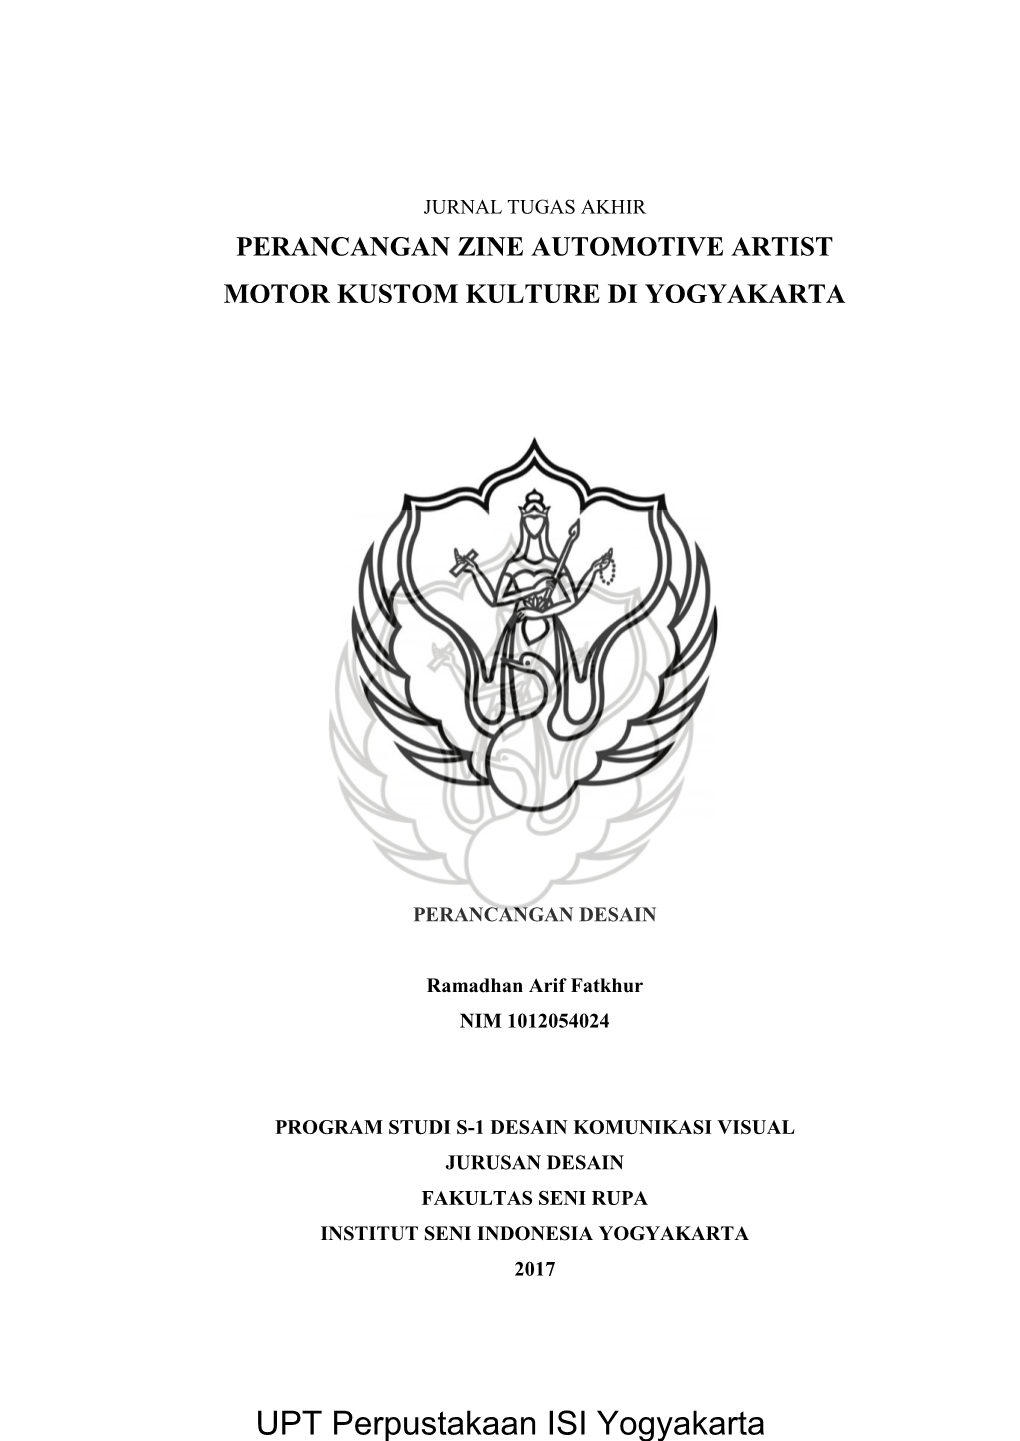 Perancangan Zine Automotive Artist Motor Kustom Kulture Di Yogyakarta